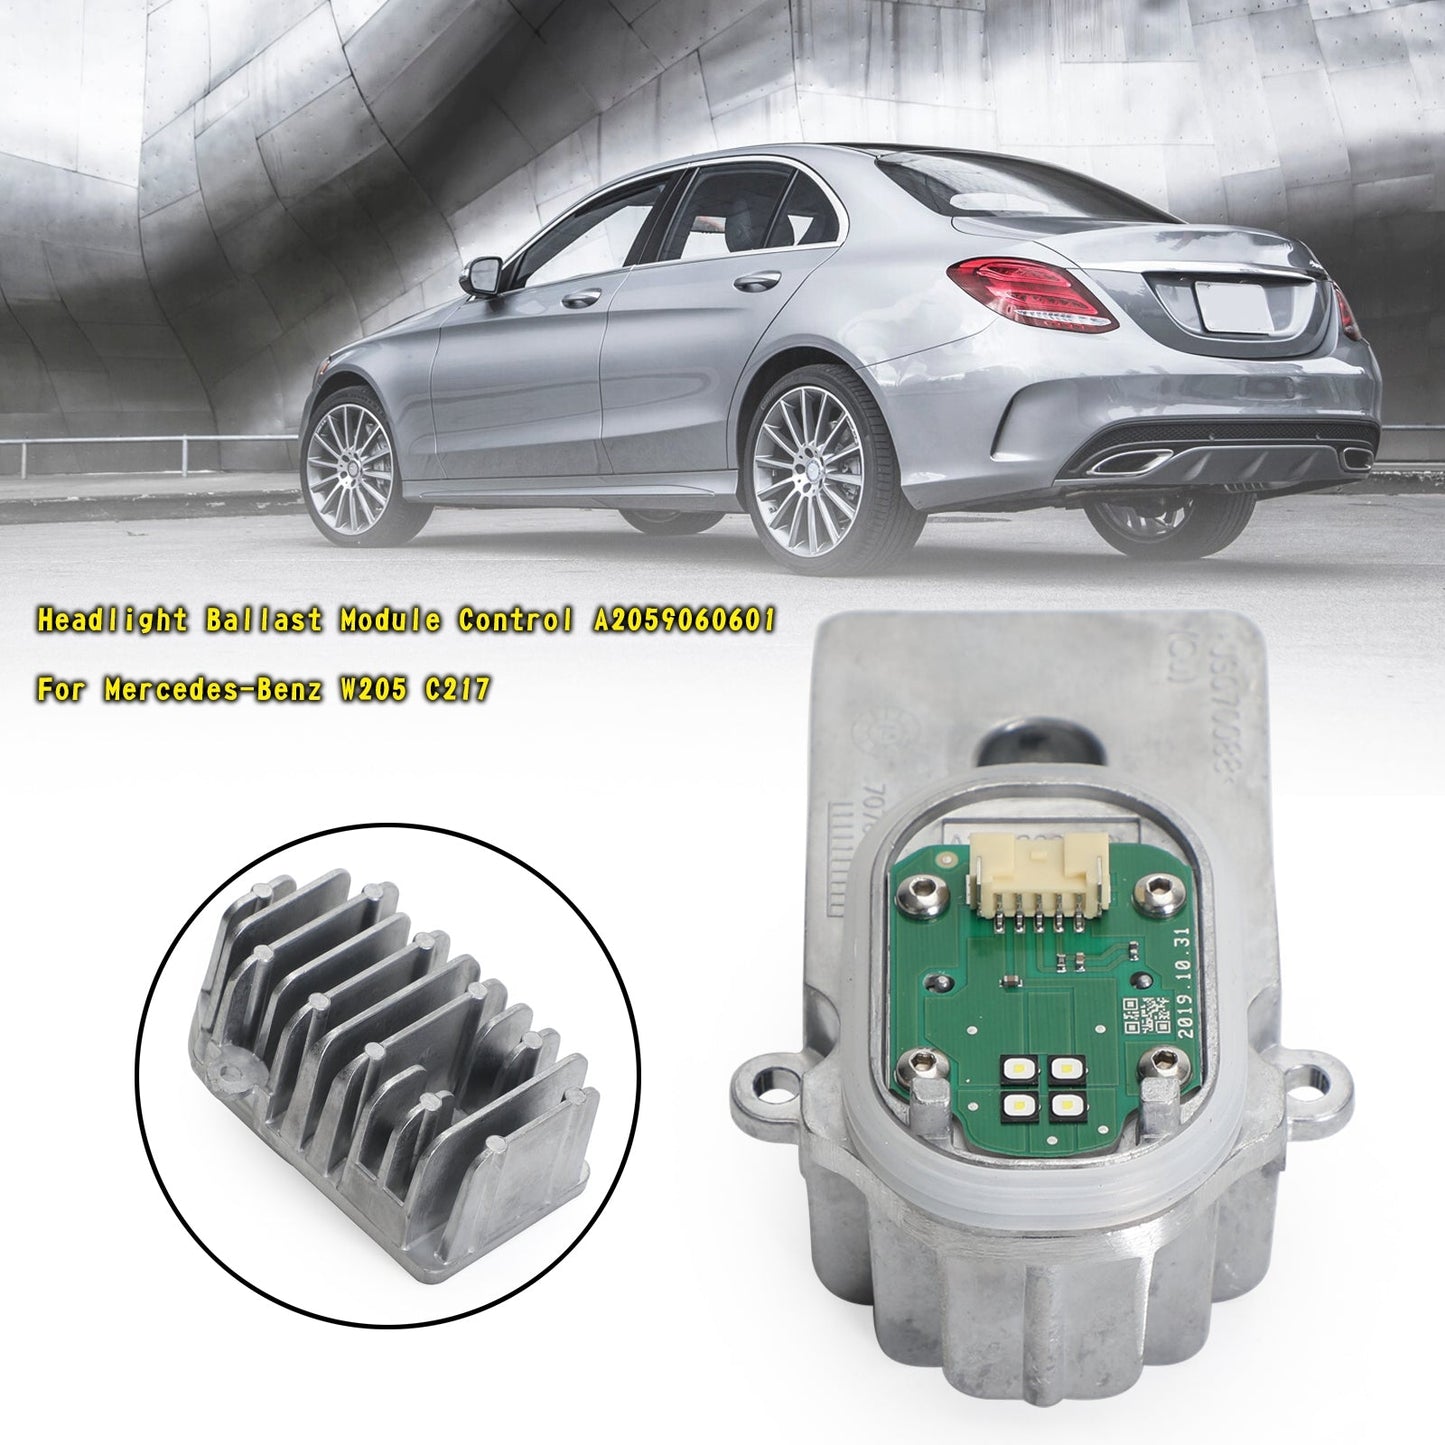 Headlight Ballast Module Control A2059060601 For Mercedes-Benz W205 C217